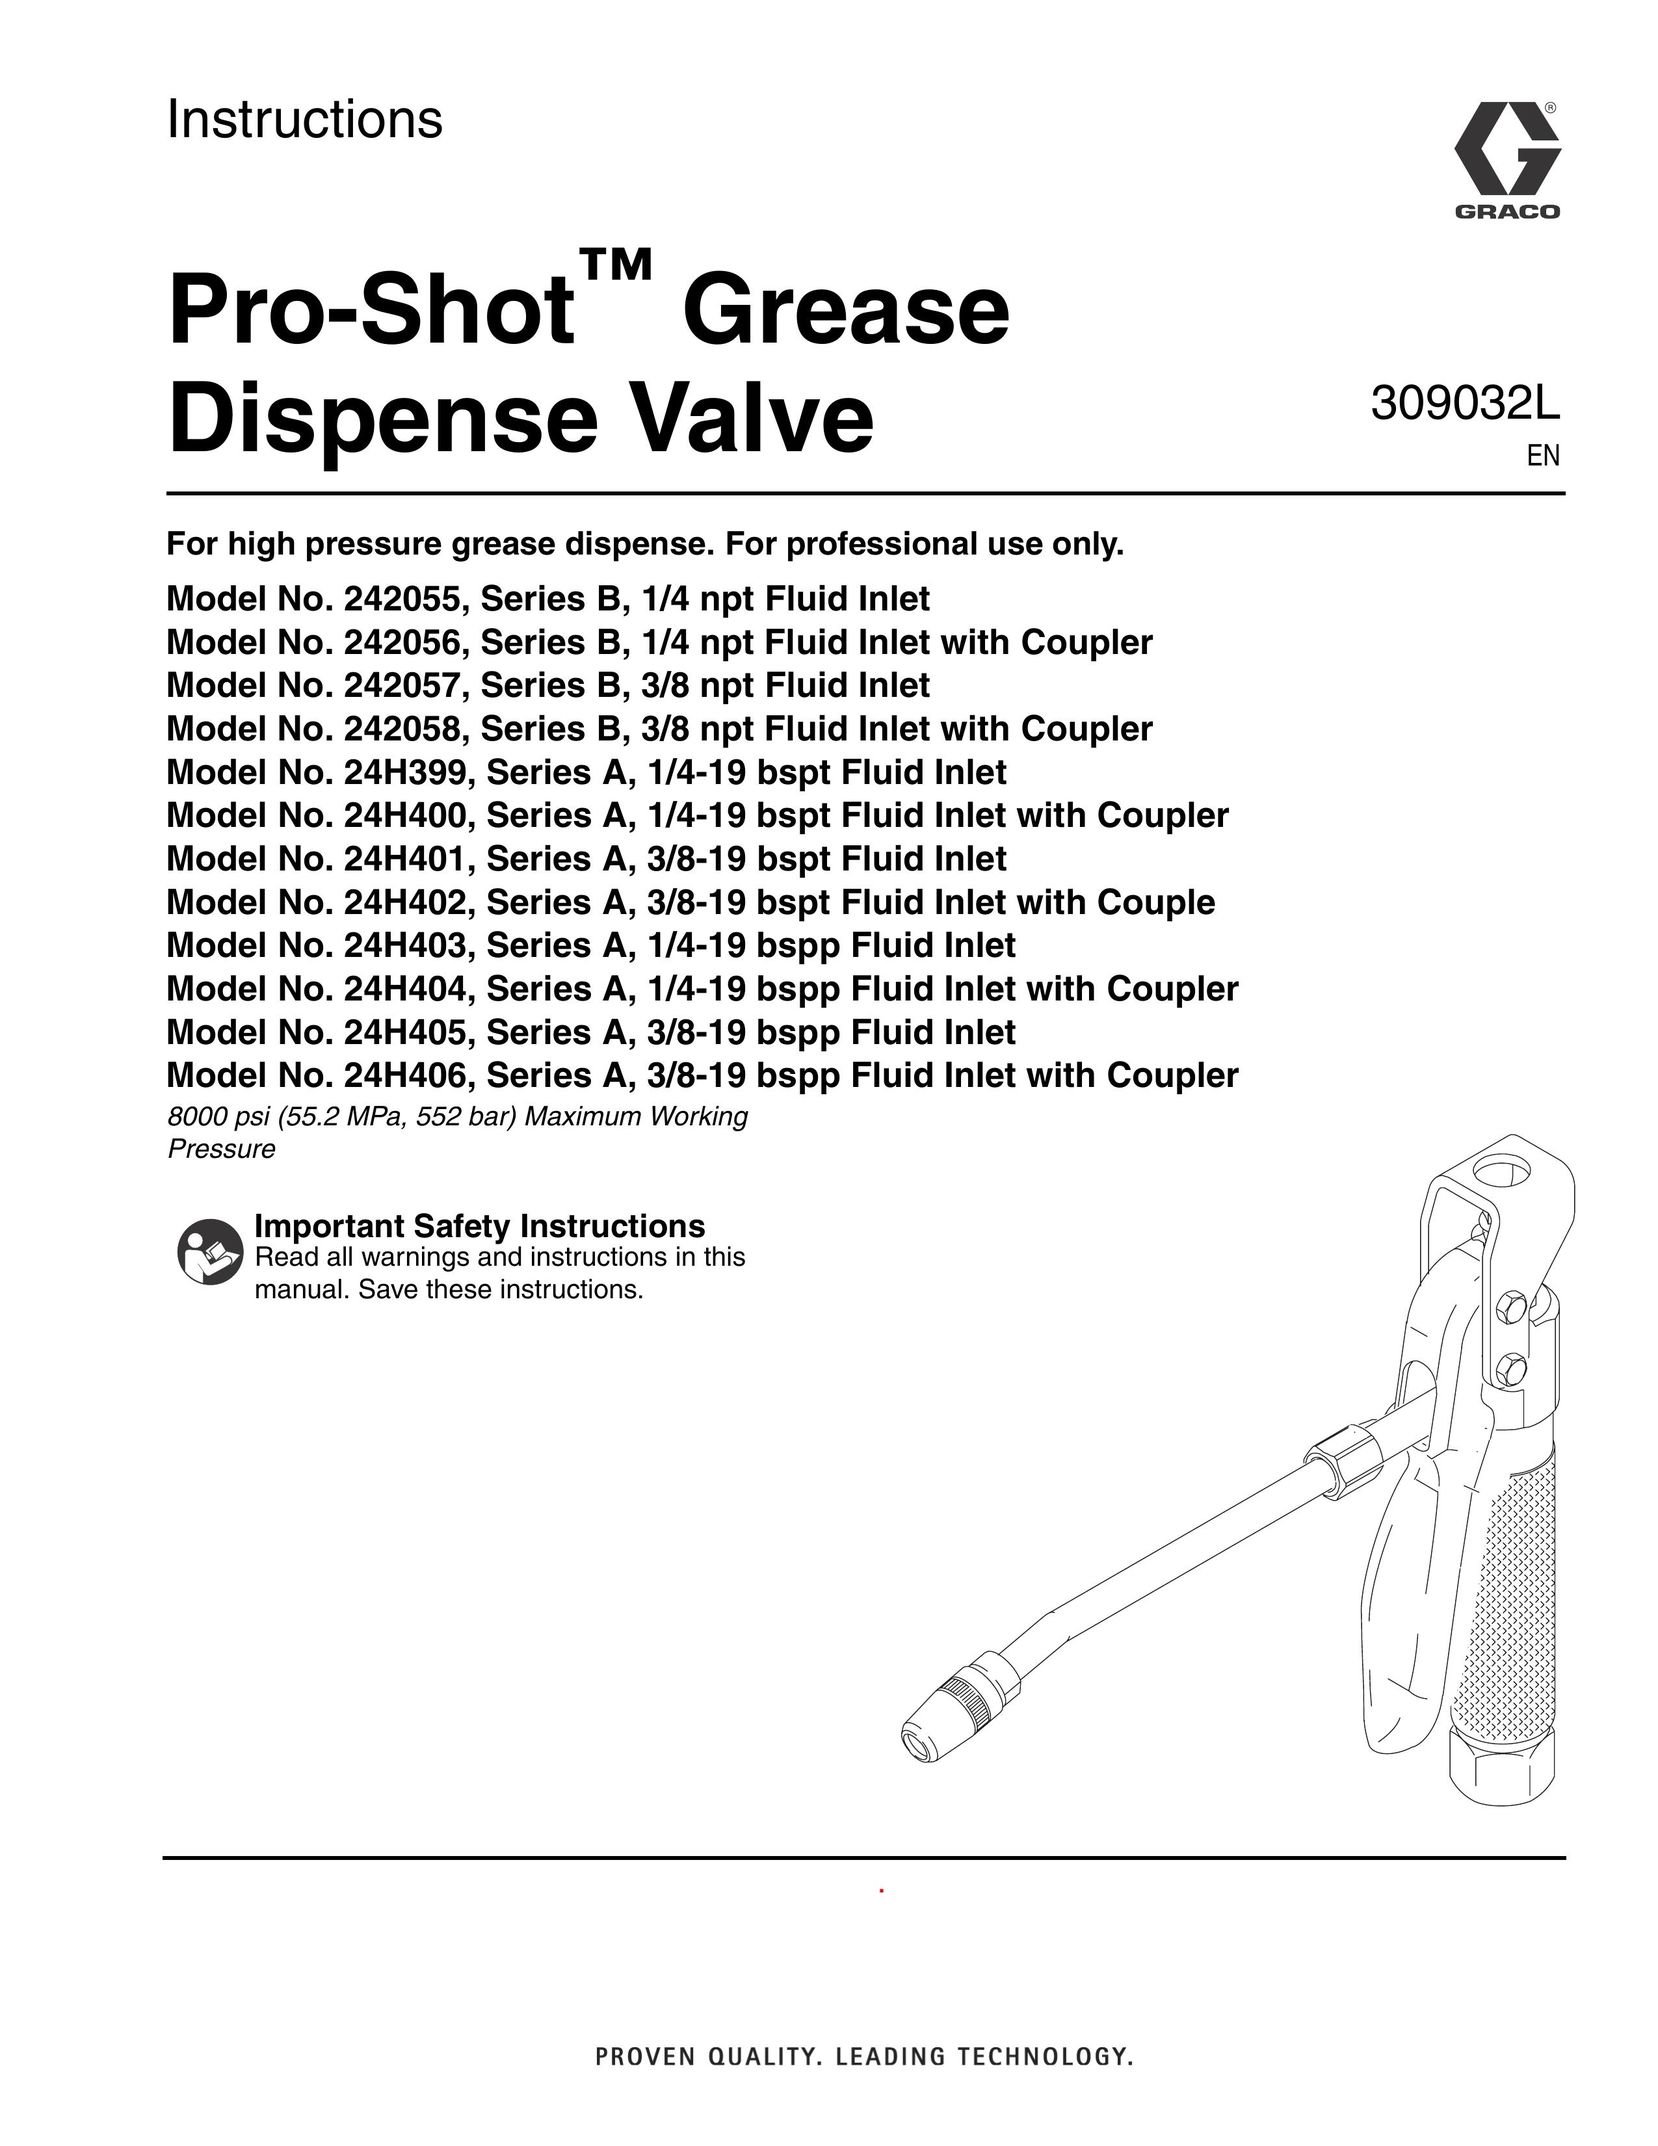 Graco 242058 Glue Gun User Manual